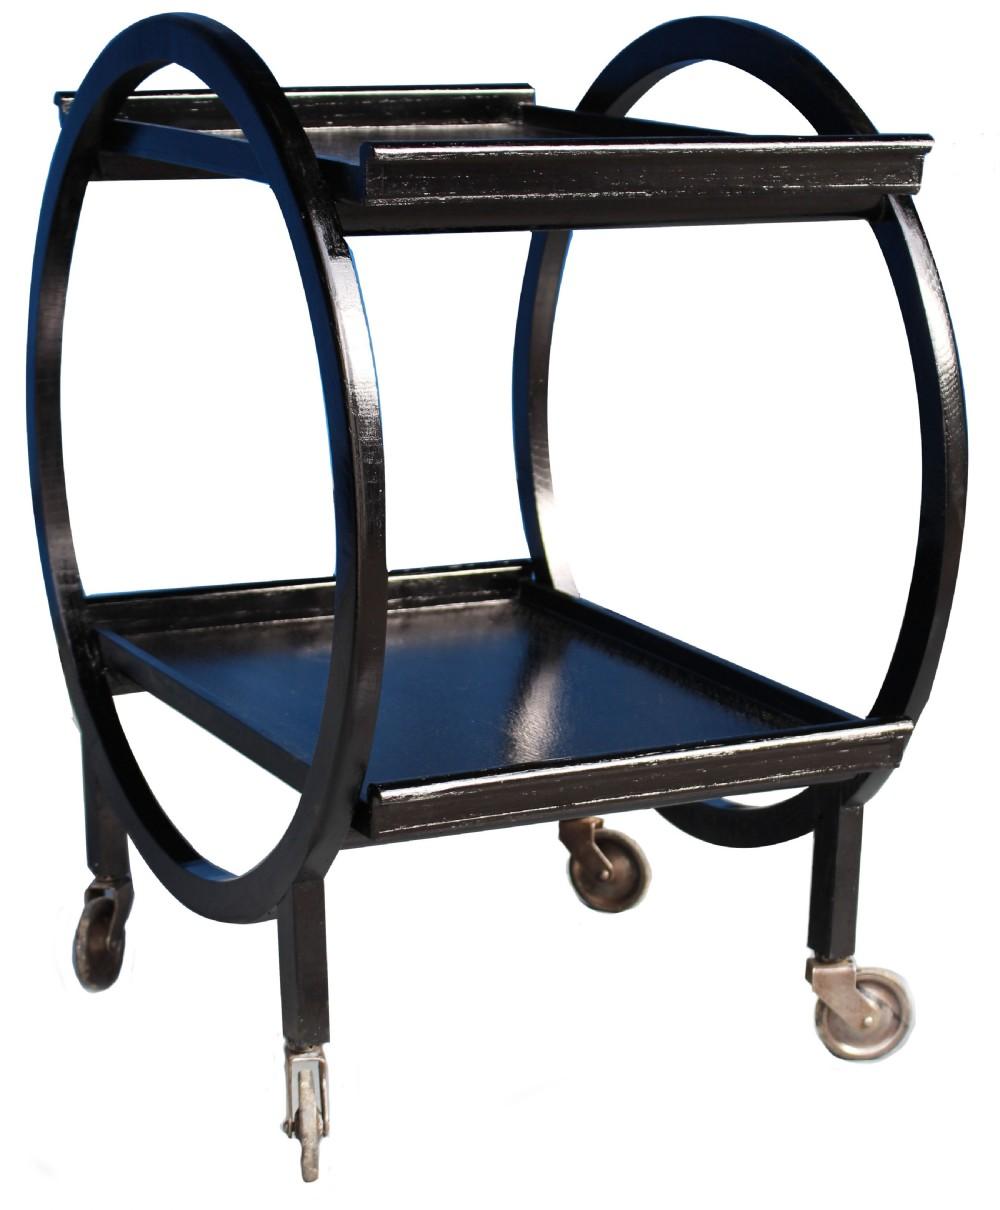 20th Century Art Deco Original 1930s English Circular Drinks Trolley Cart